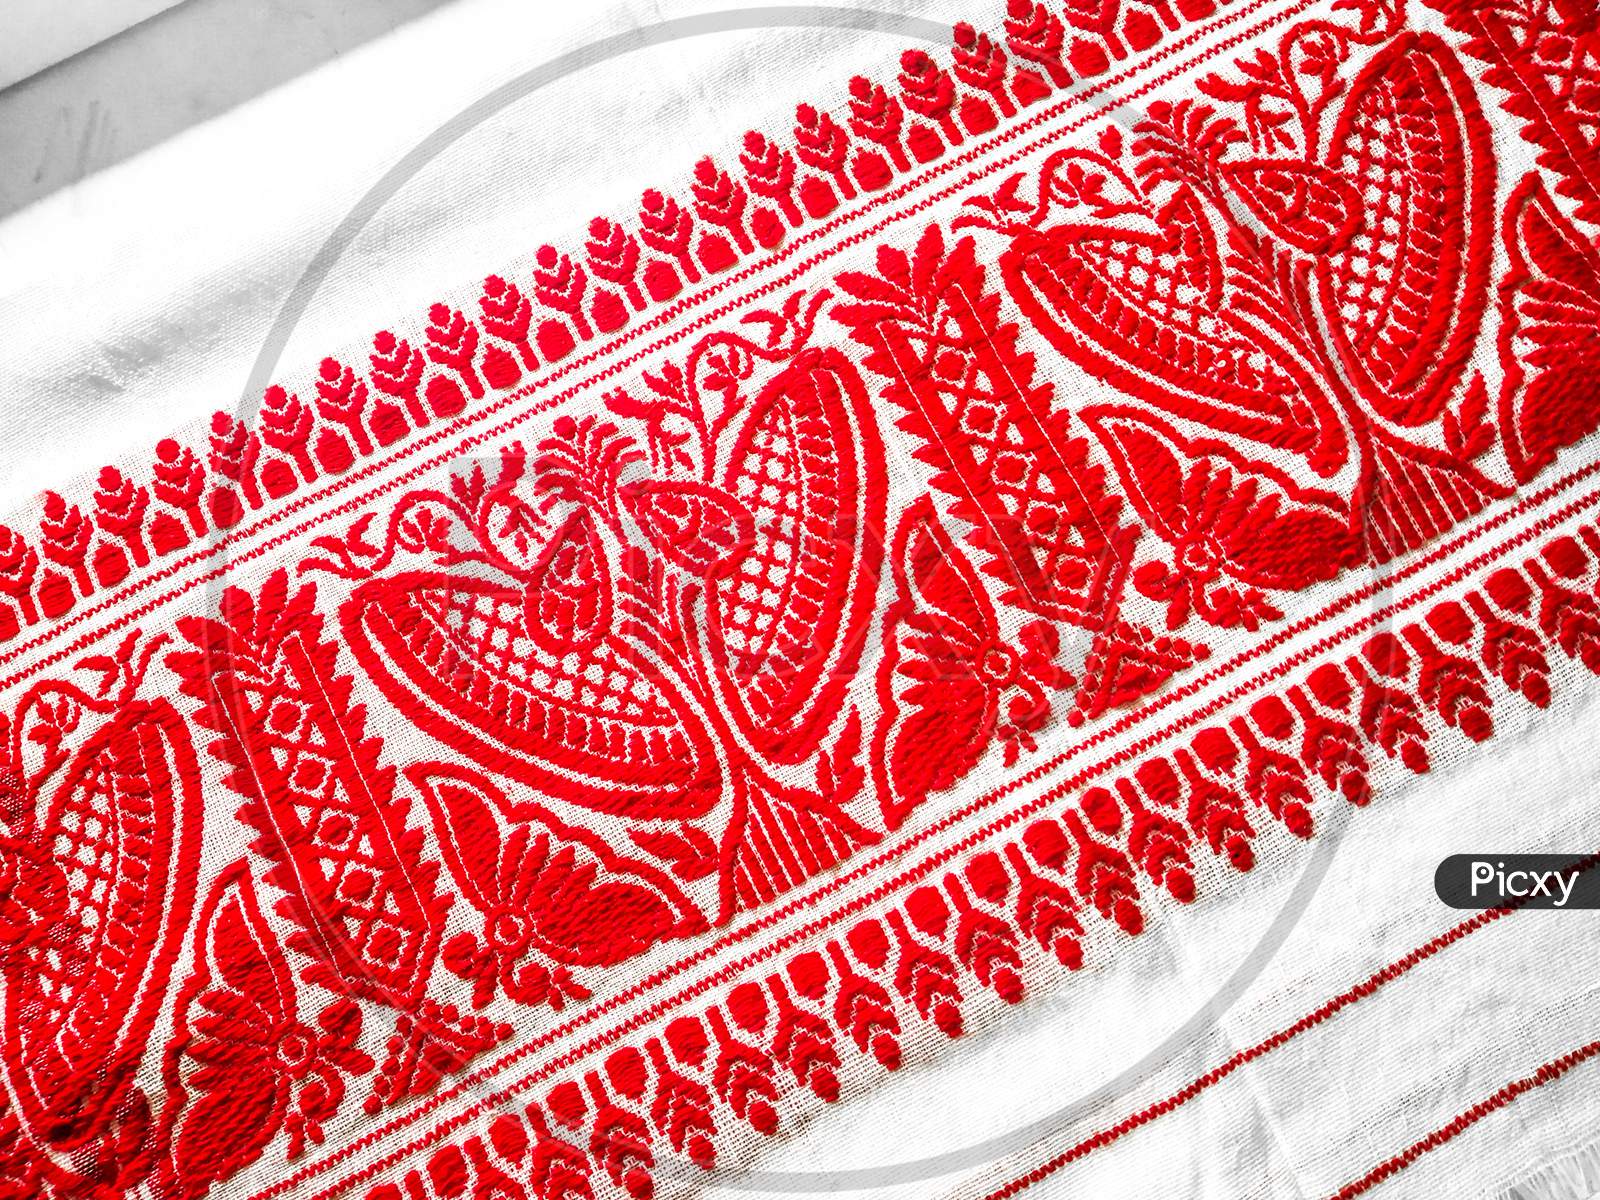 Gamosa ( gamusa , gamocha ) assamese traditional cloth. Assamese gamosa textures , gamusa is a emotion for assamese people.